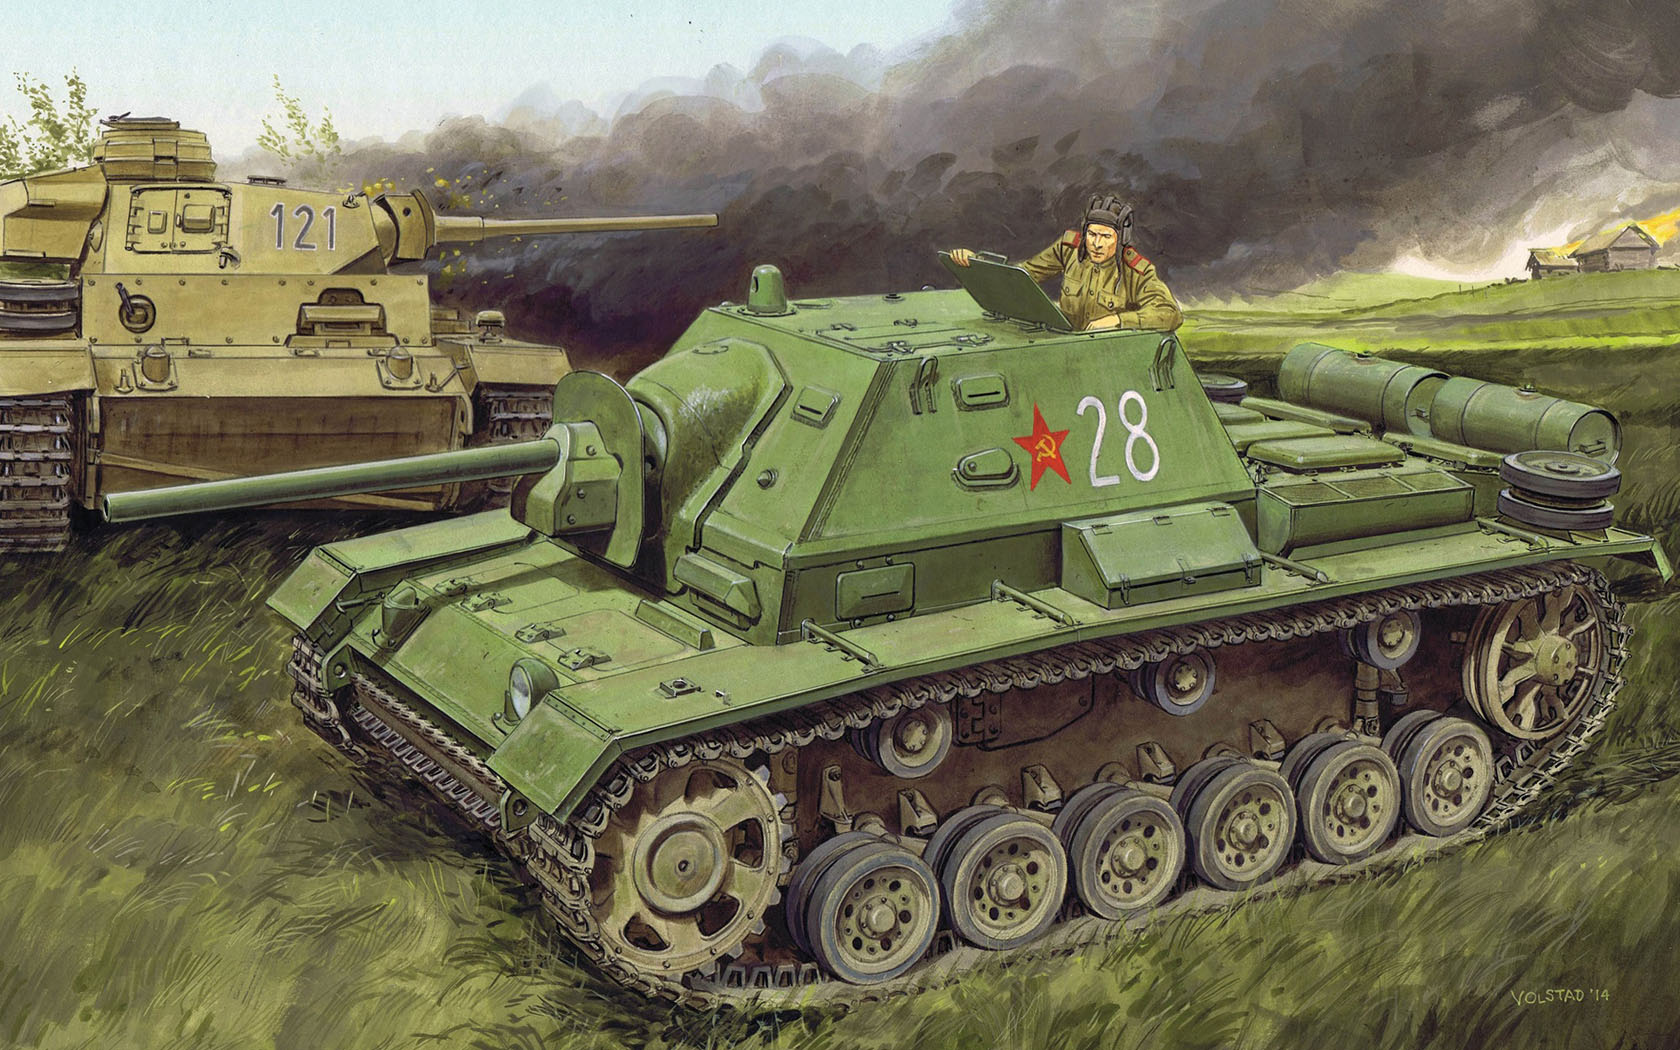 General 1680x1050 tank army military military vehicle artwork grass signature men soldier uniform smoke SU-76i Russian/Soviet tanks German tanks